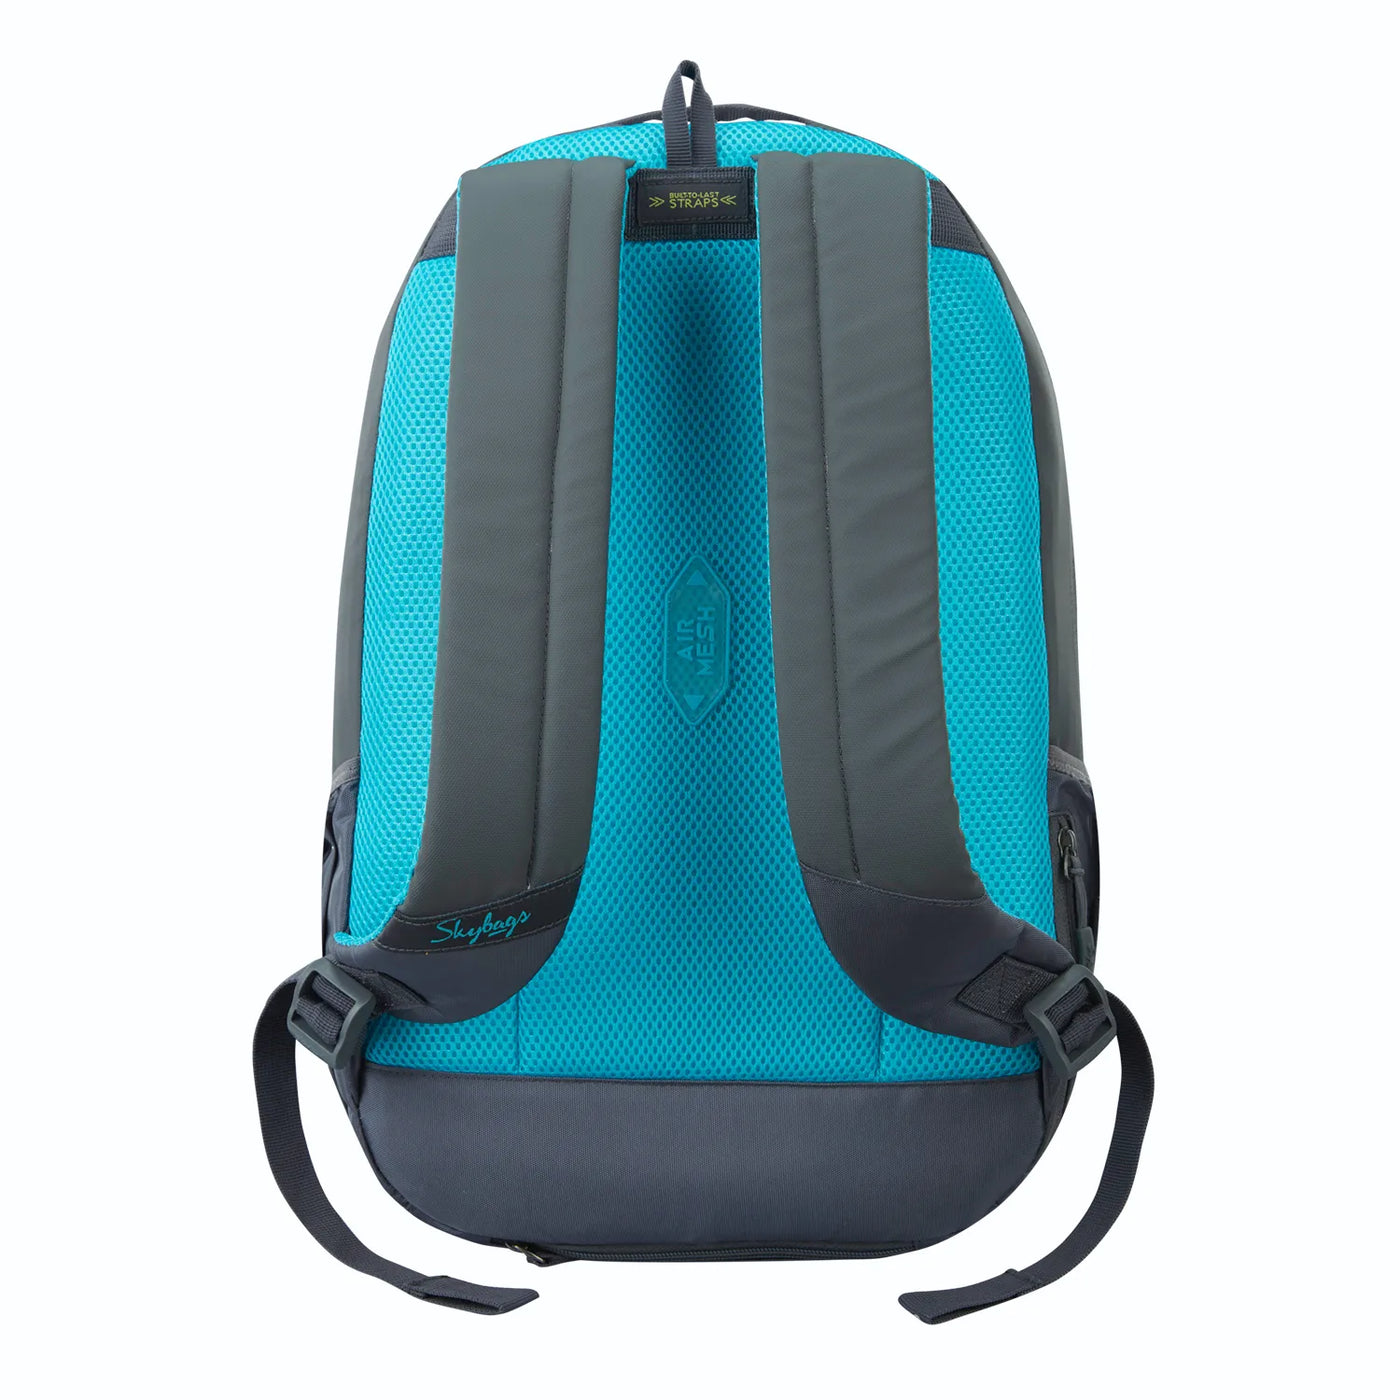 Skybags Techno DG Office Bag (Black) : Amazon.in: Fashion